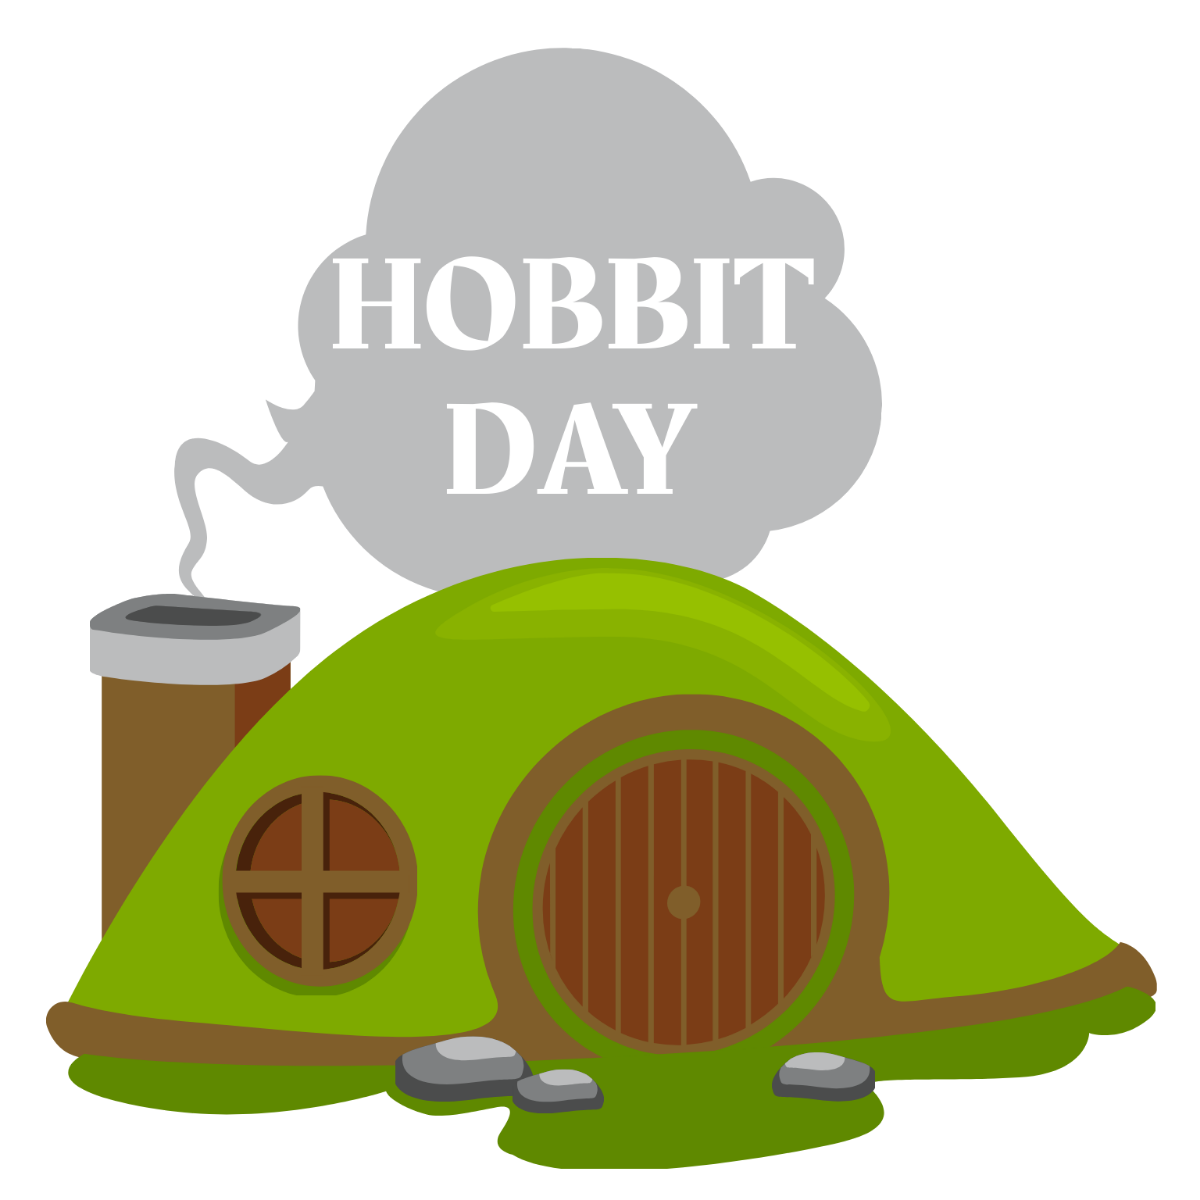 Free Hobbit Day Illustration Template